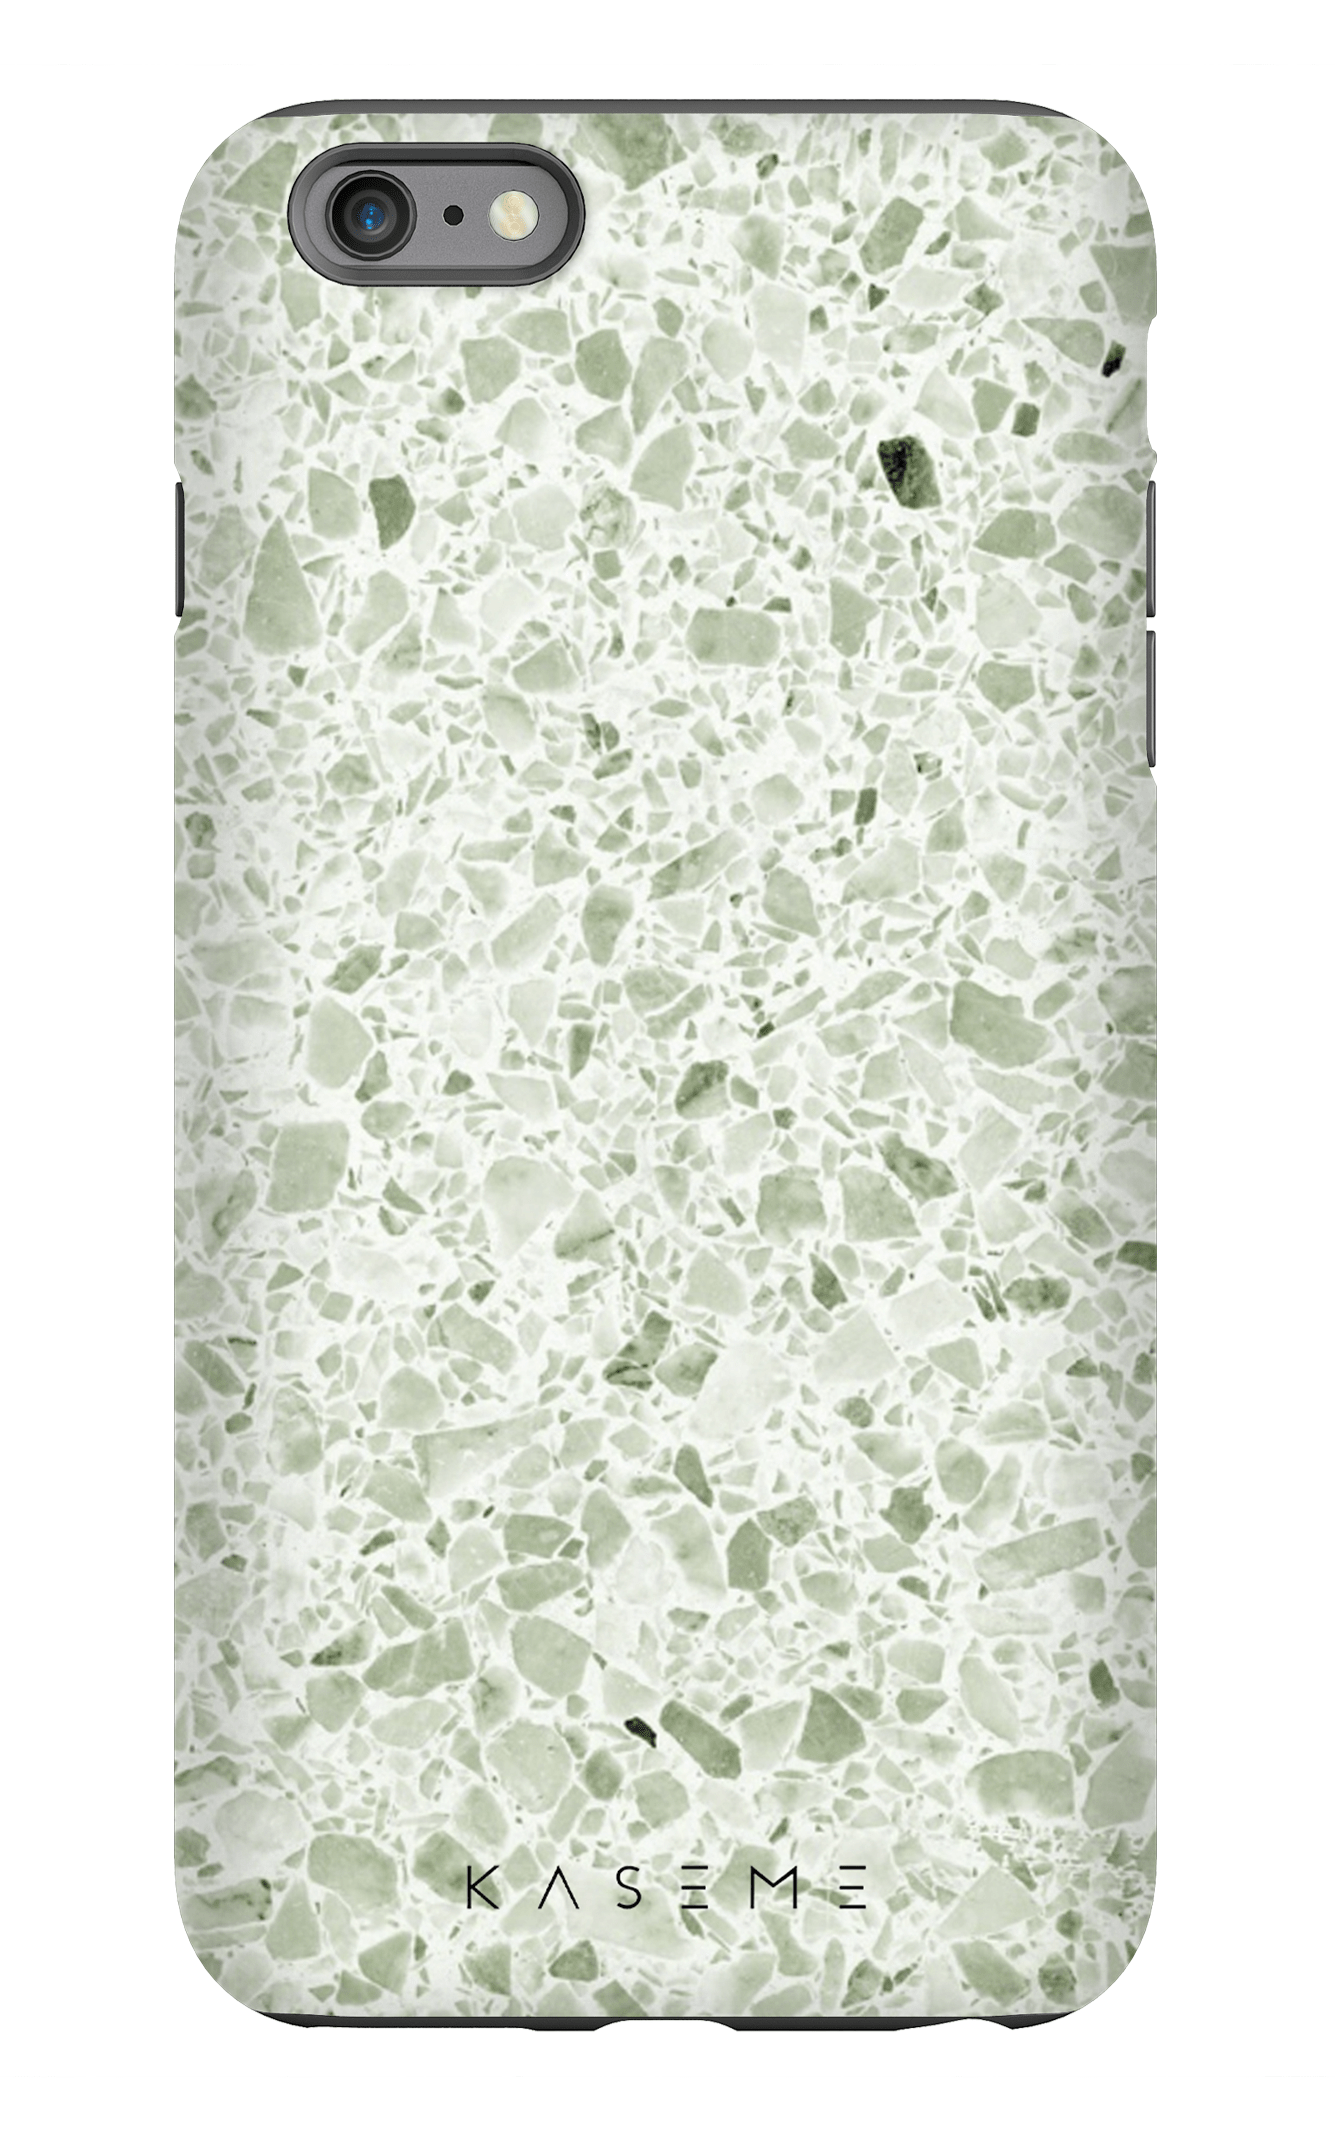 Frozen stone green - iPhone 6/6s Plus